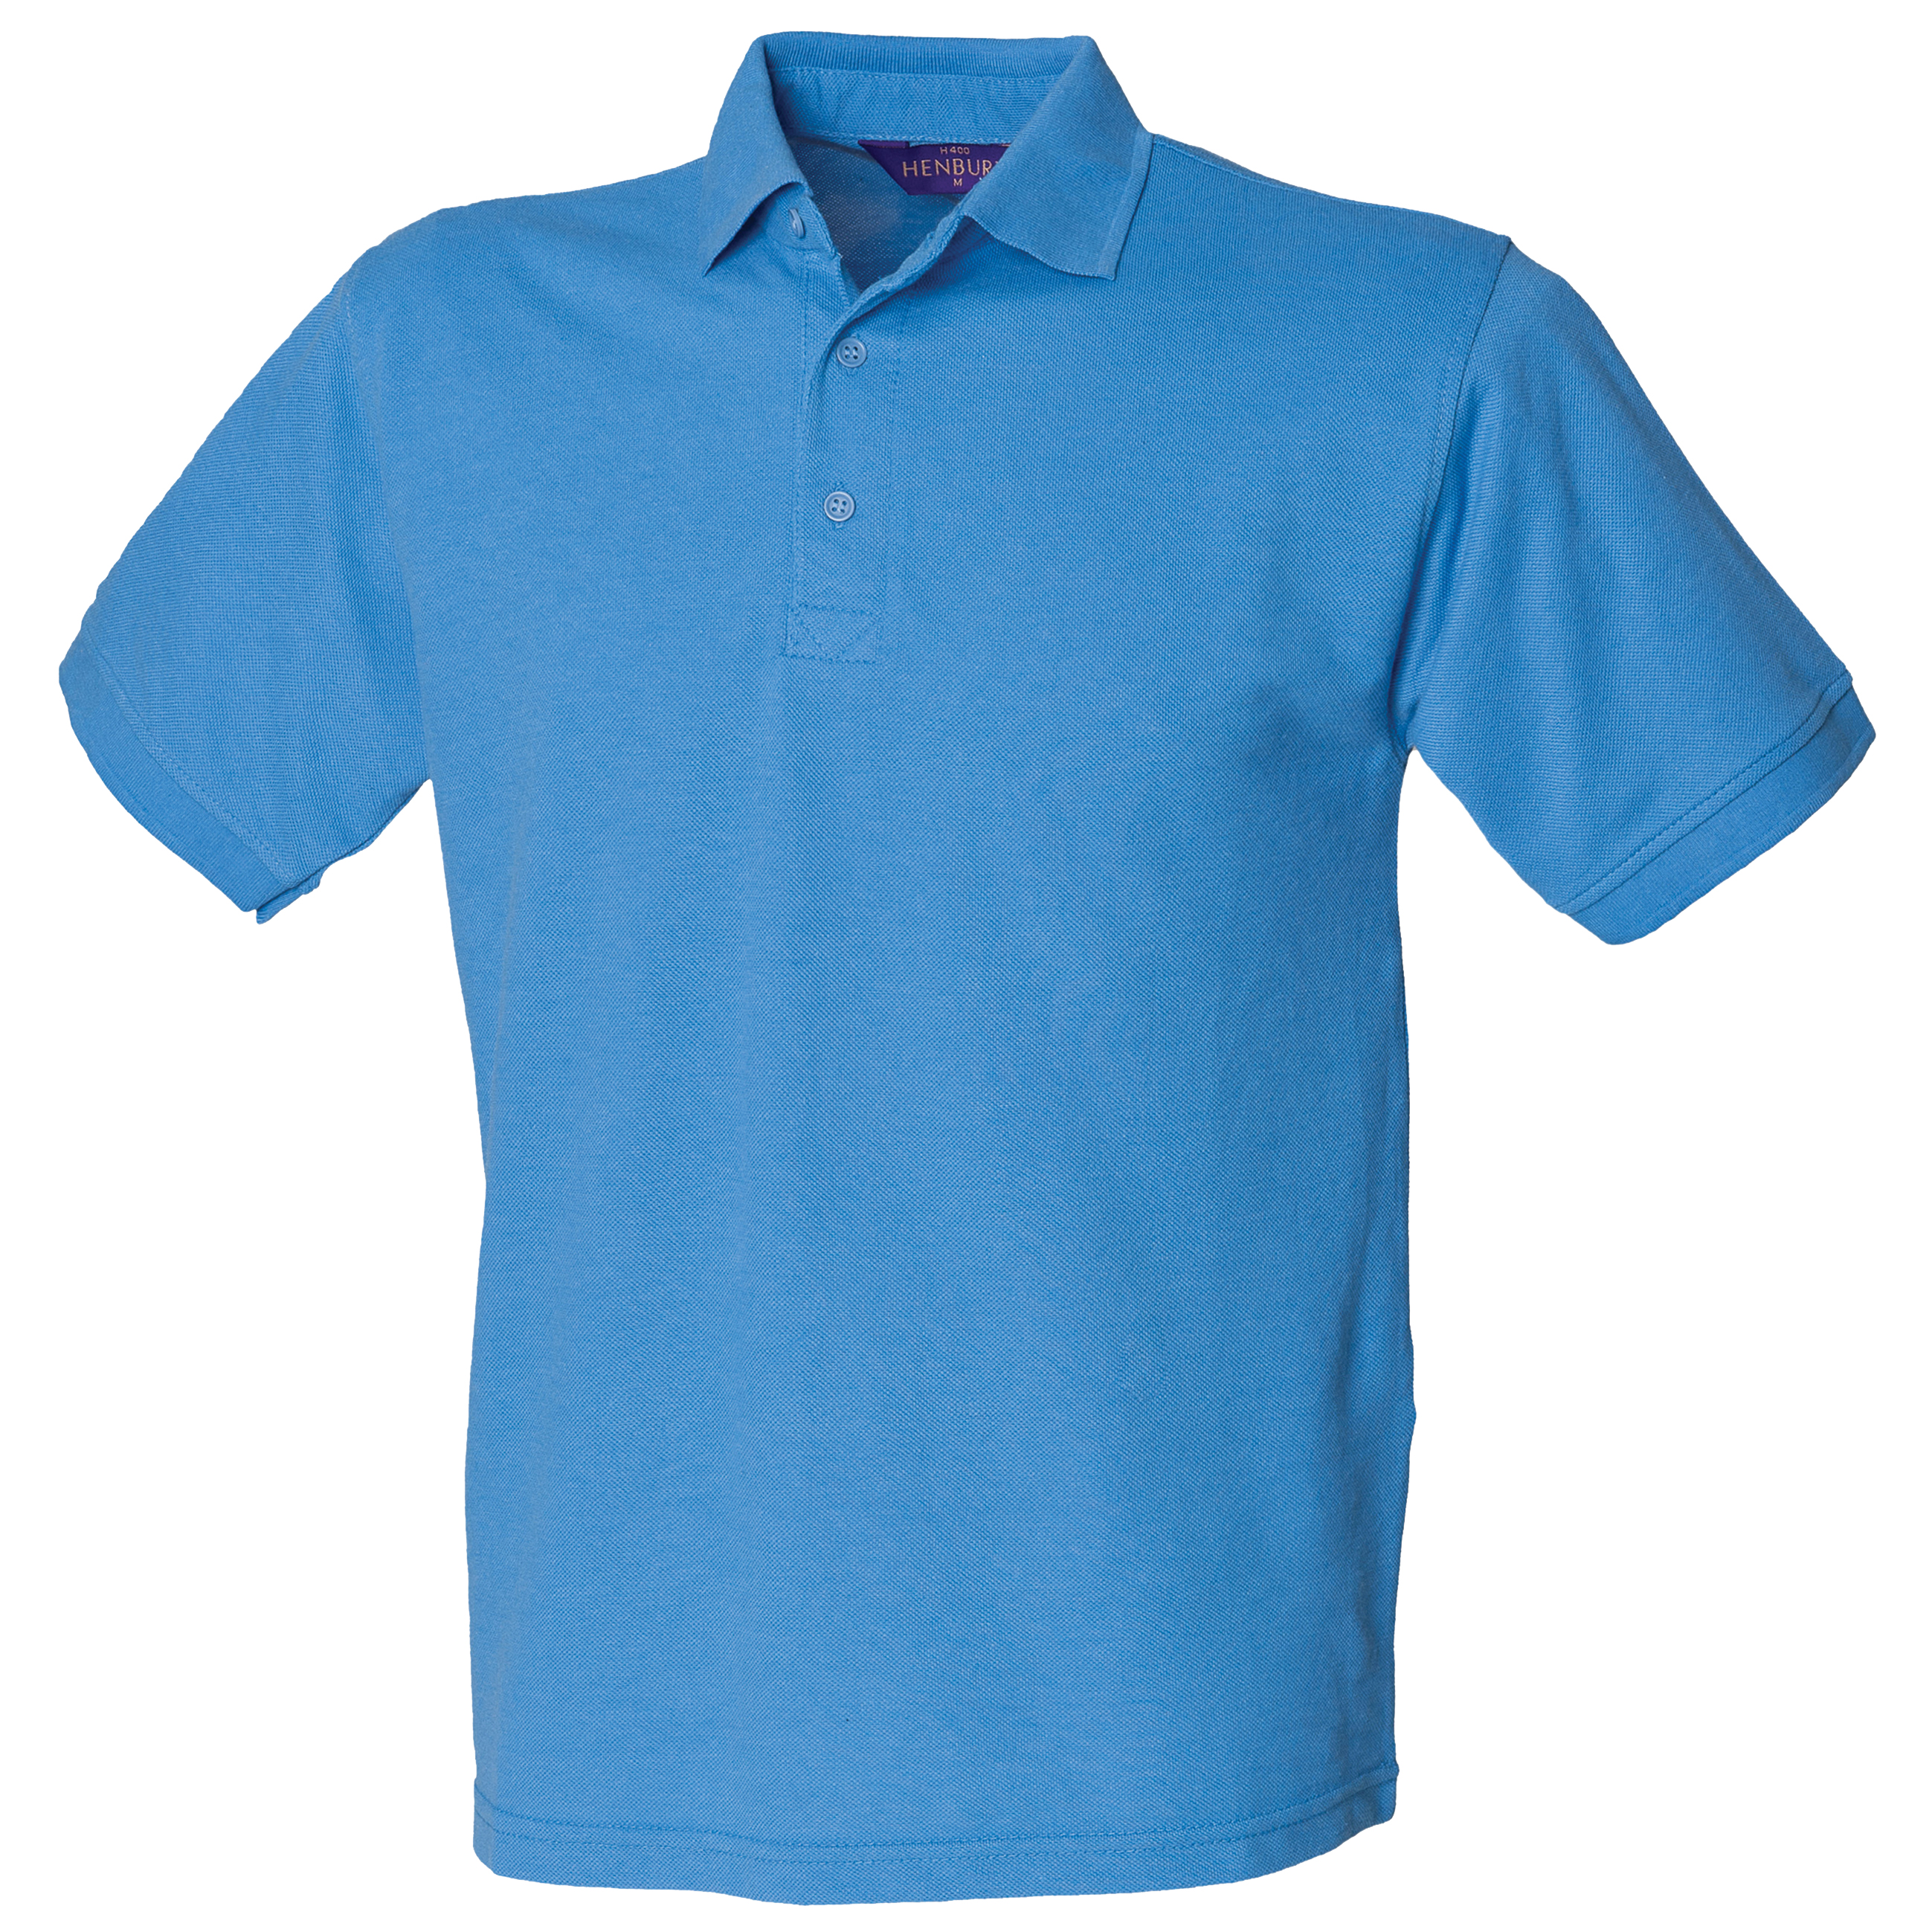 ax-httpswebsystems.s3.amazonaws.comtmp_for_downloadhenbury-65-35-classic-pique-polo-shirt-mid-blue.jpg